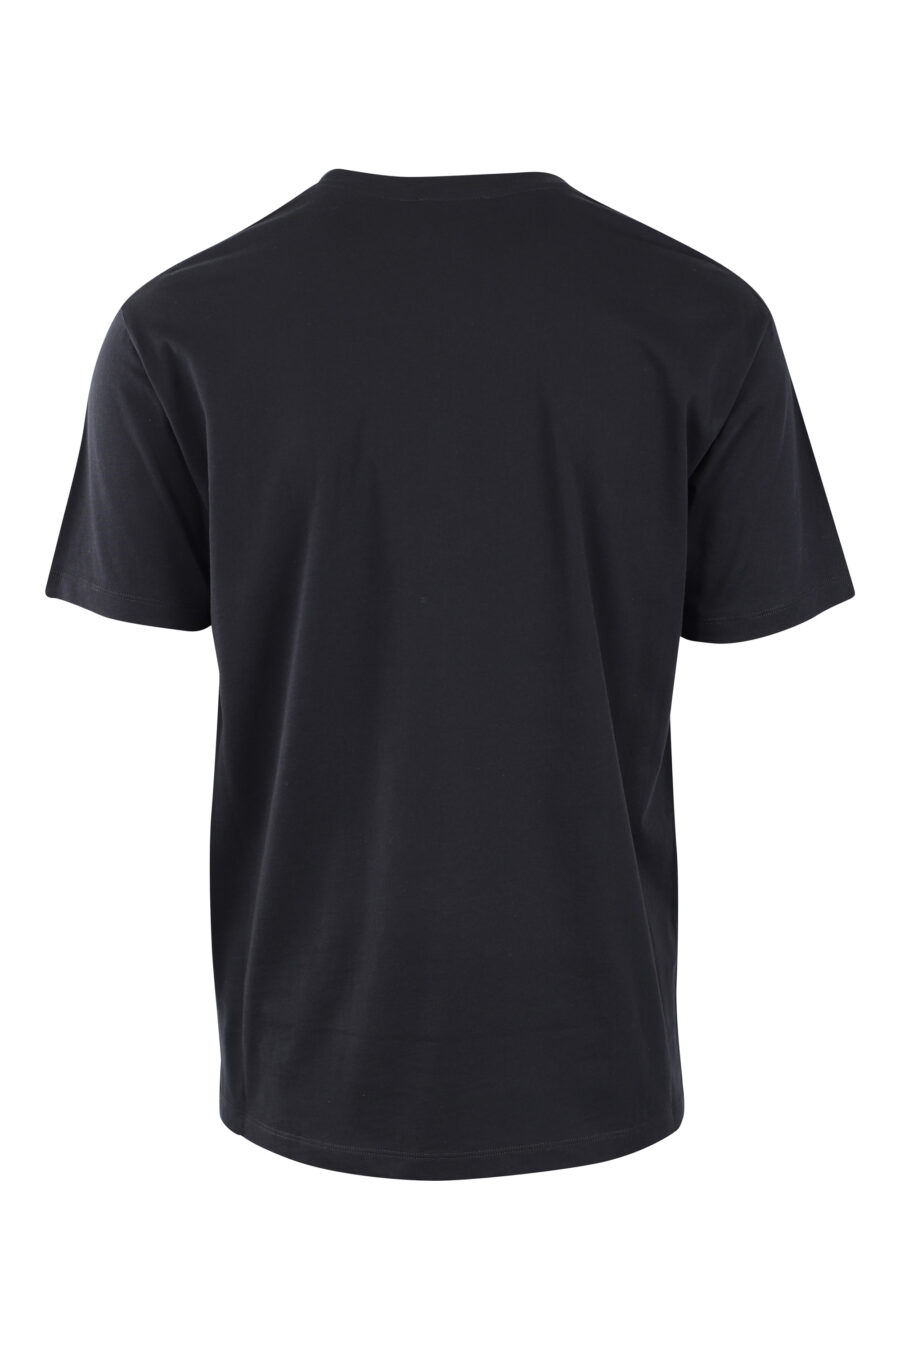 T-Shirt schwarz mit weißem Maxilogue "paris" - IMG 2580